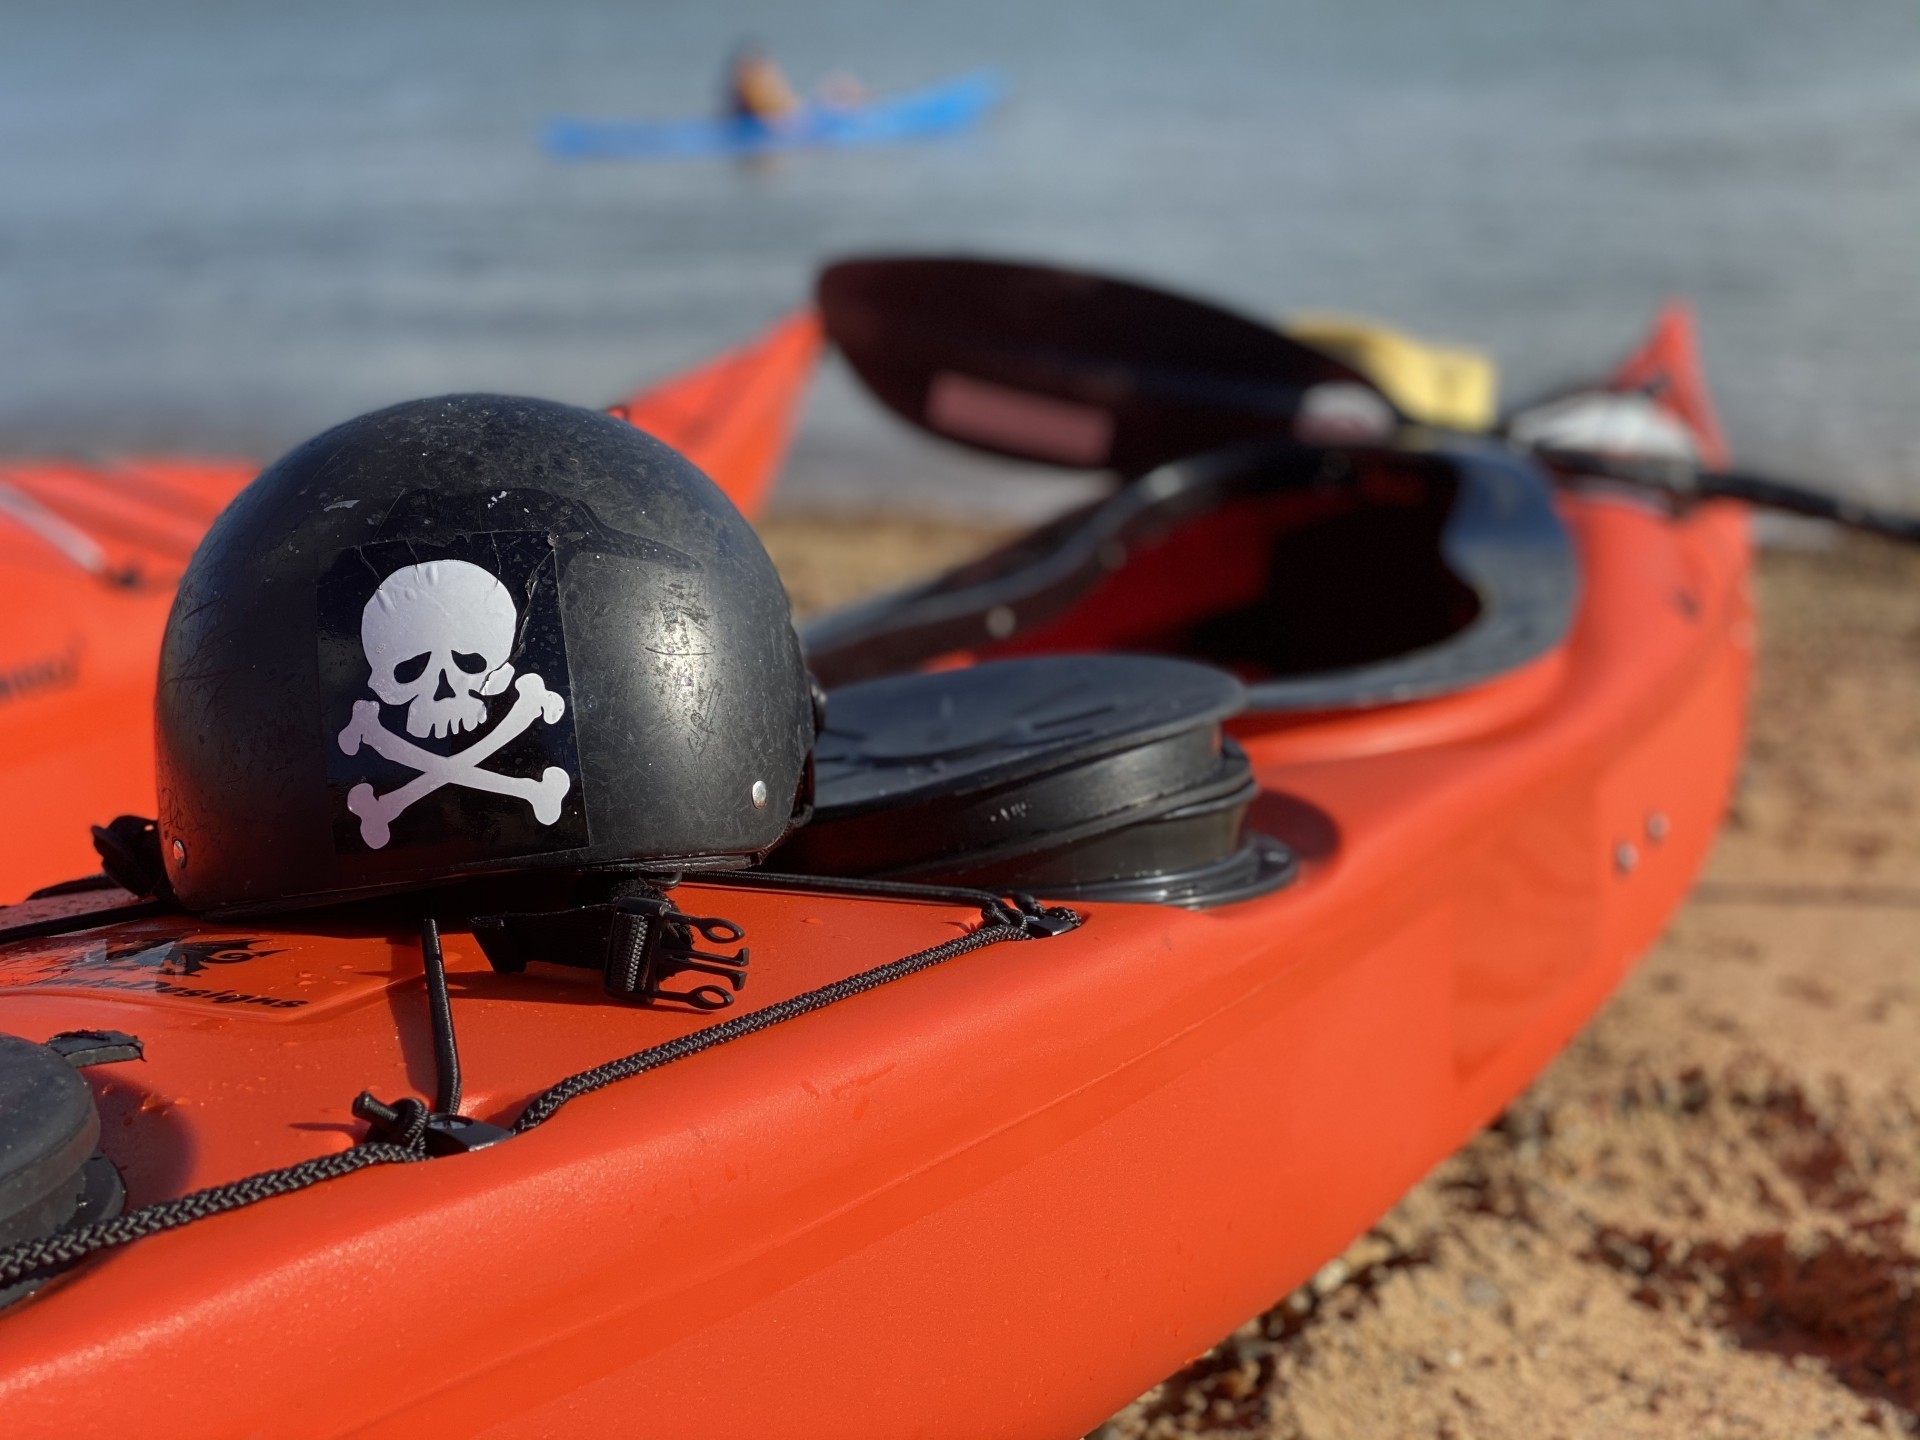 Red sea kayaks on a sandy beach with a black helmet lying on the rear deck.